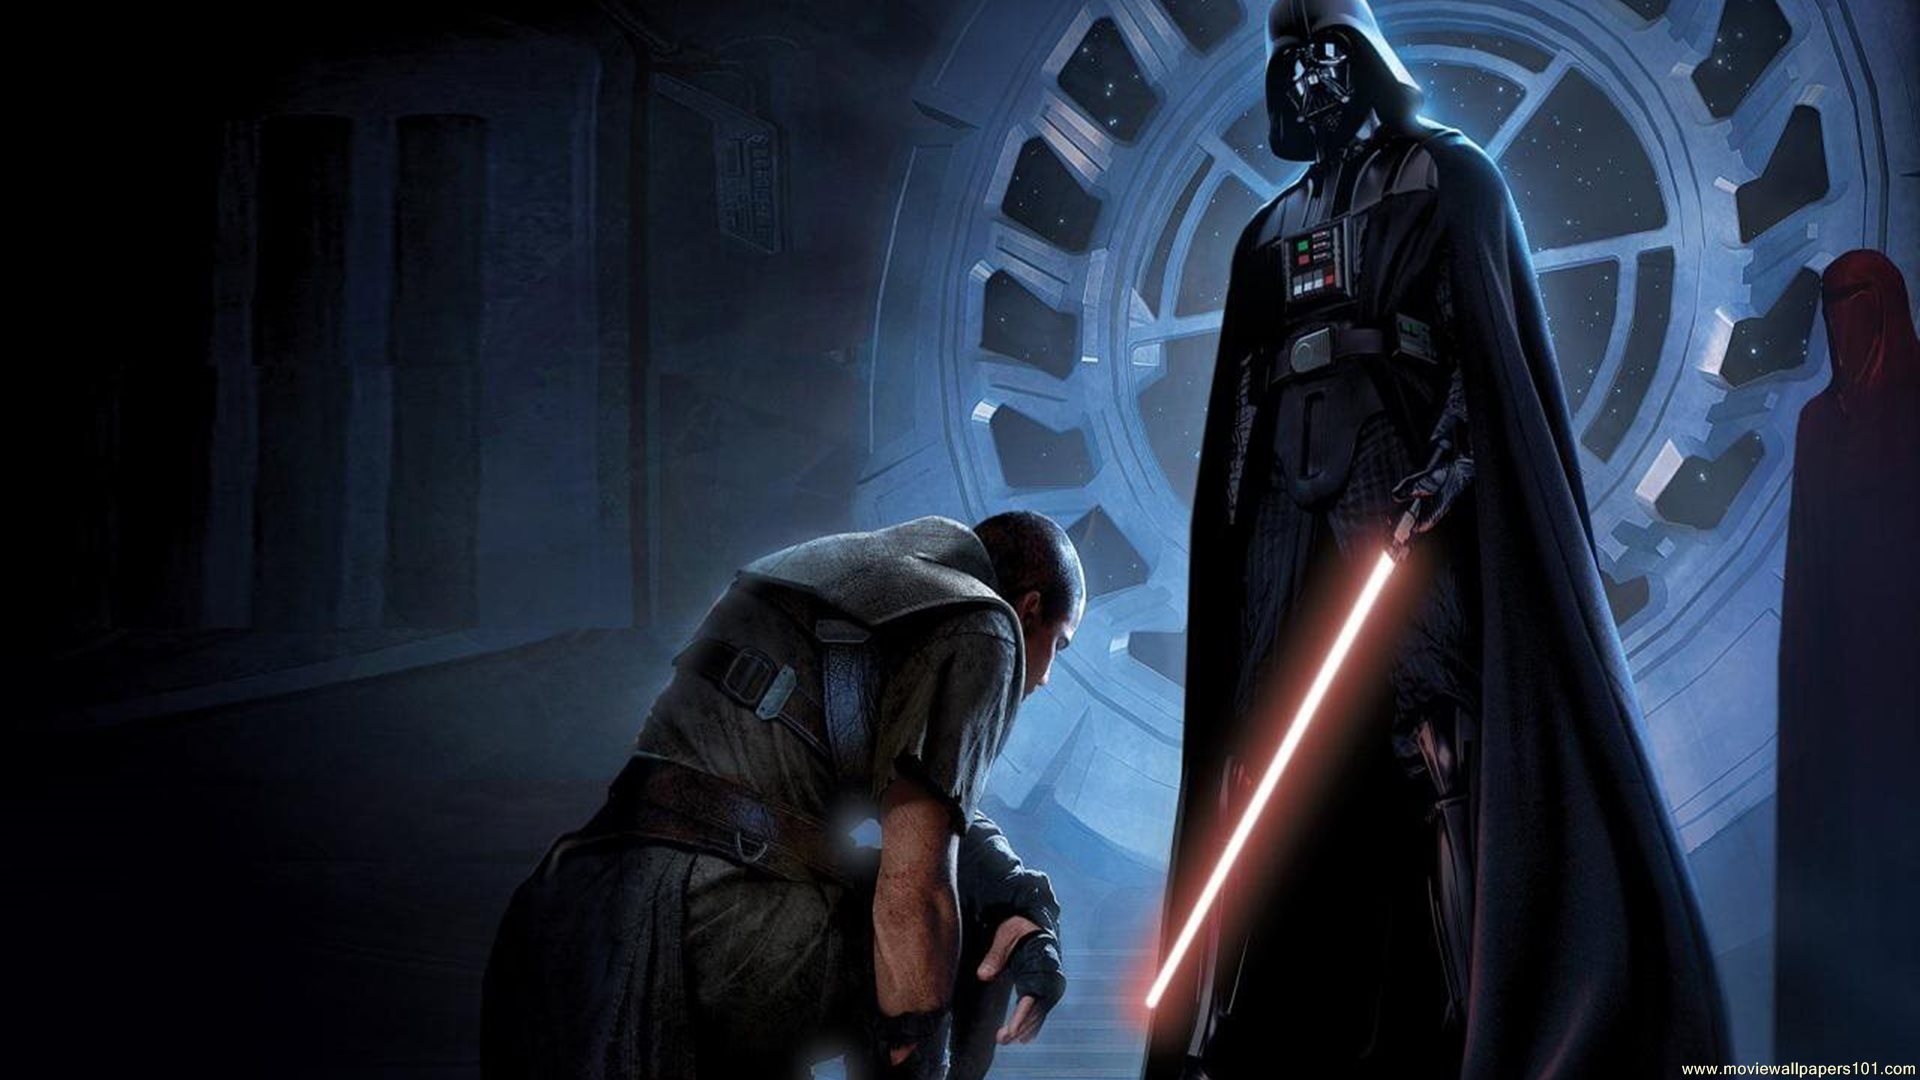 Download Star Wars VII Force Awakens Movie HD Wallpaper Search